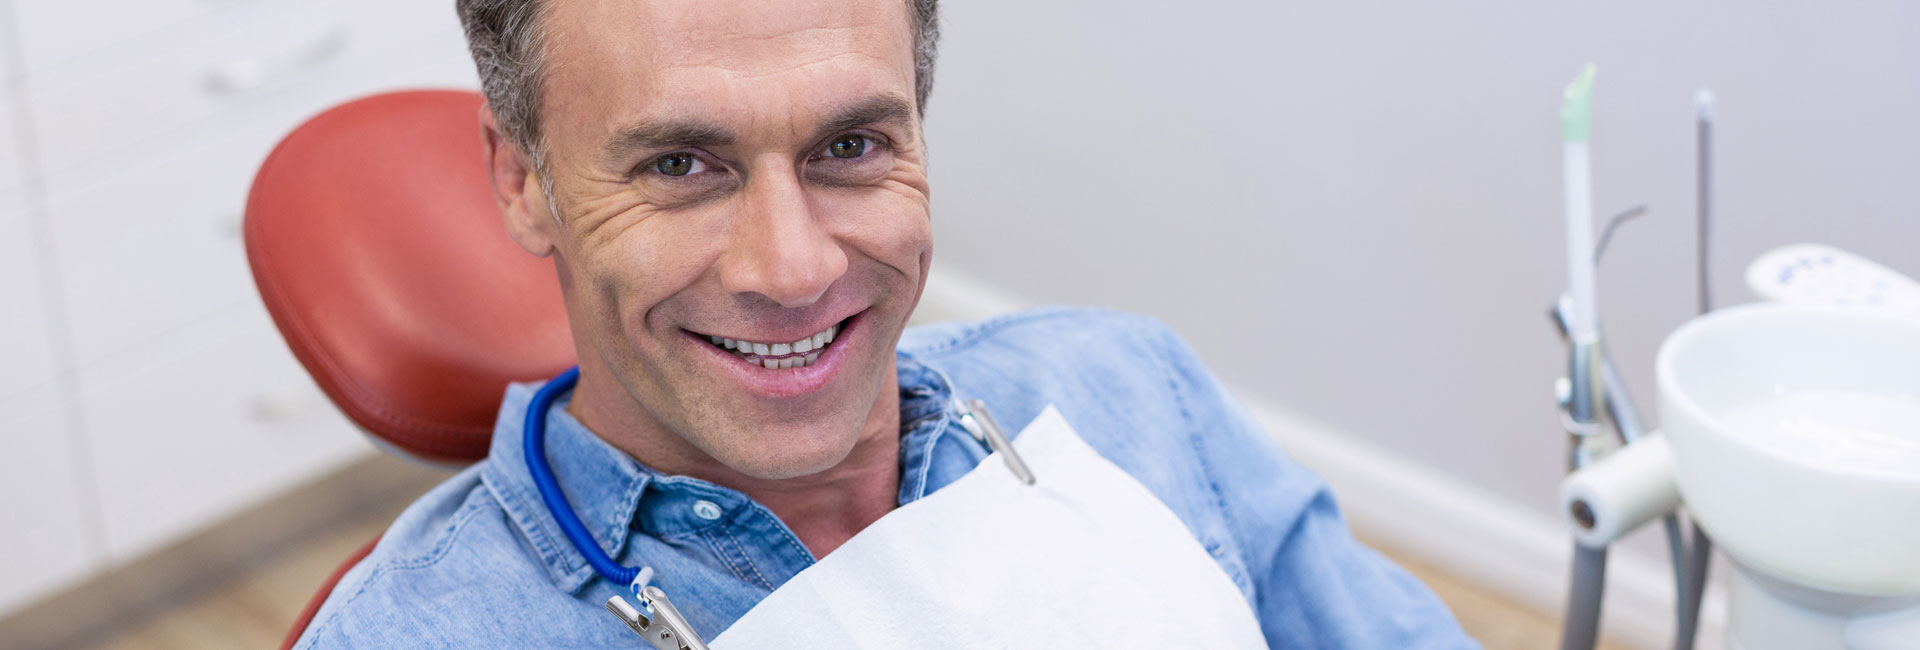 Man getting ready for dental implant treatment